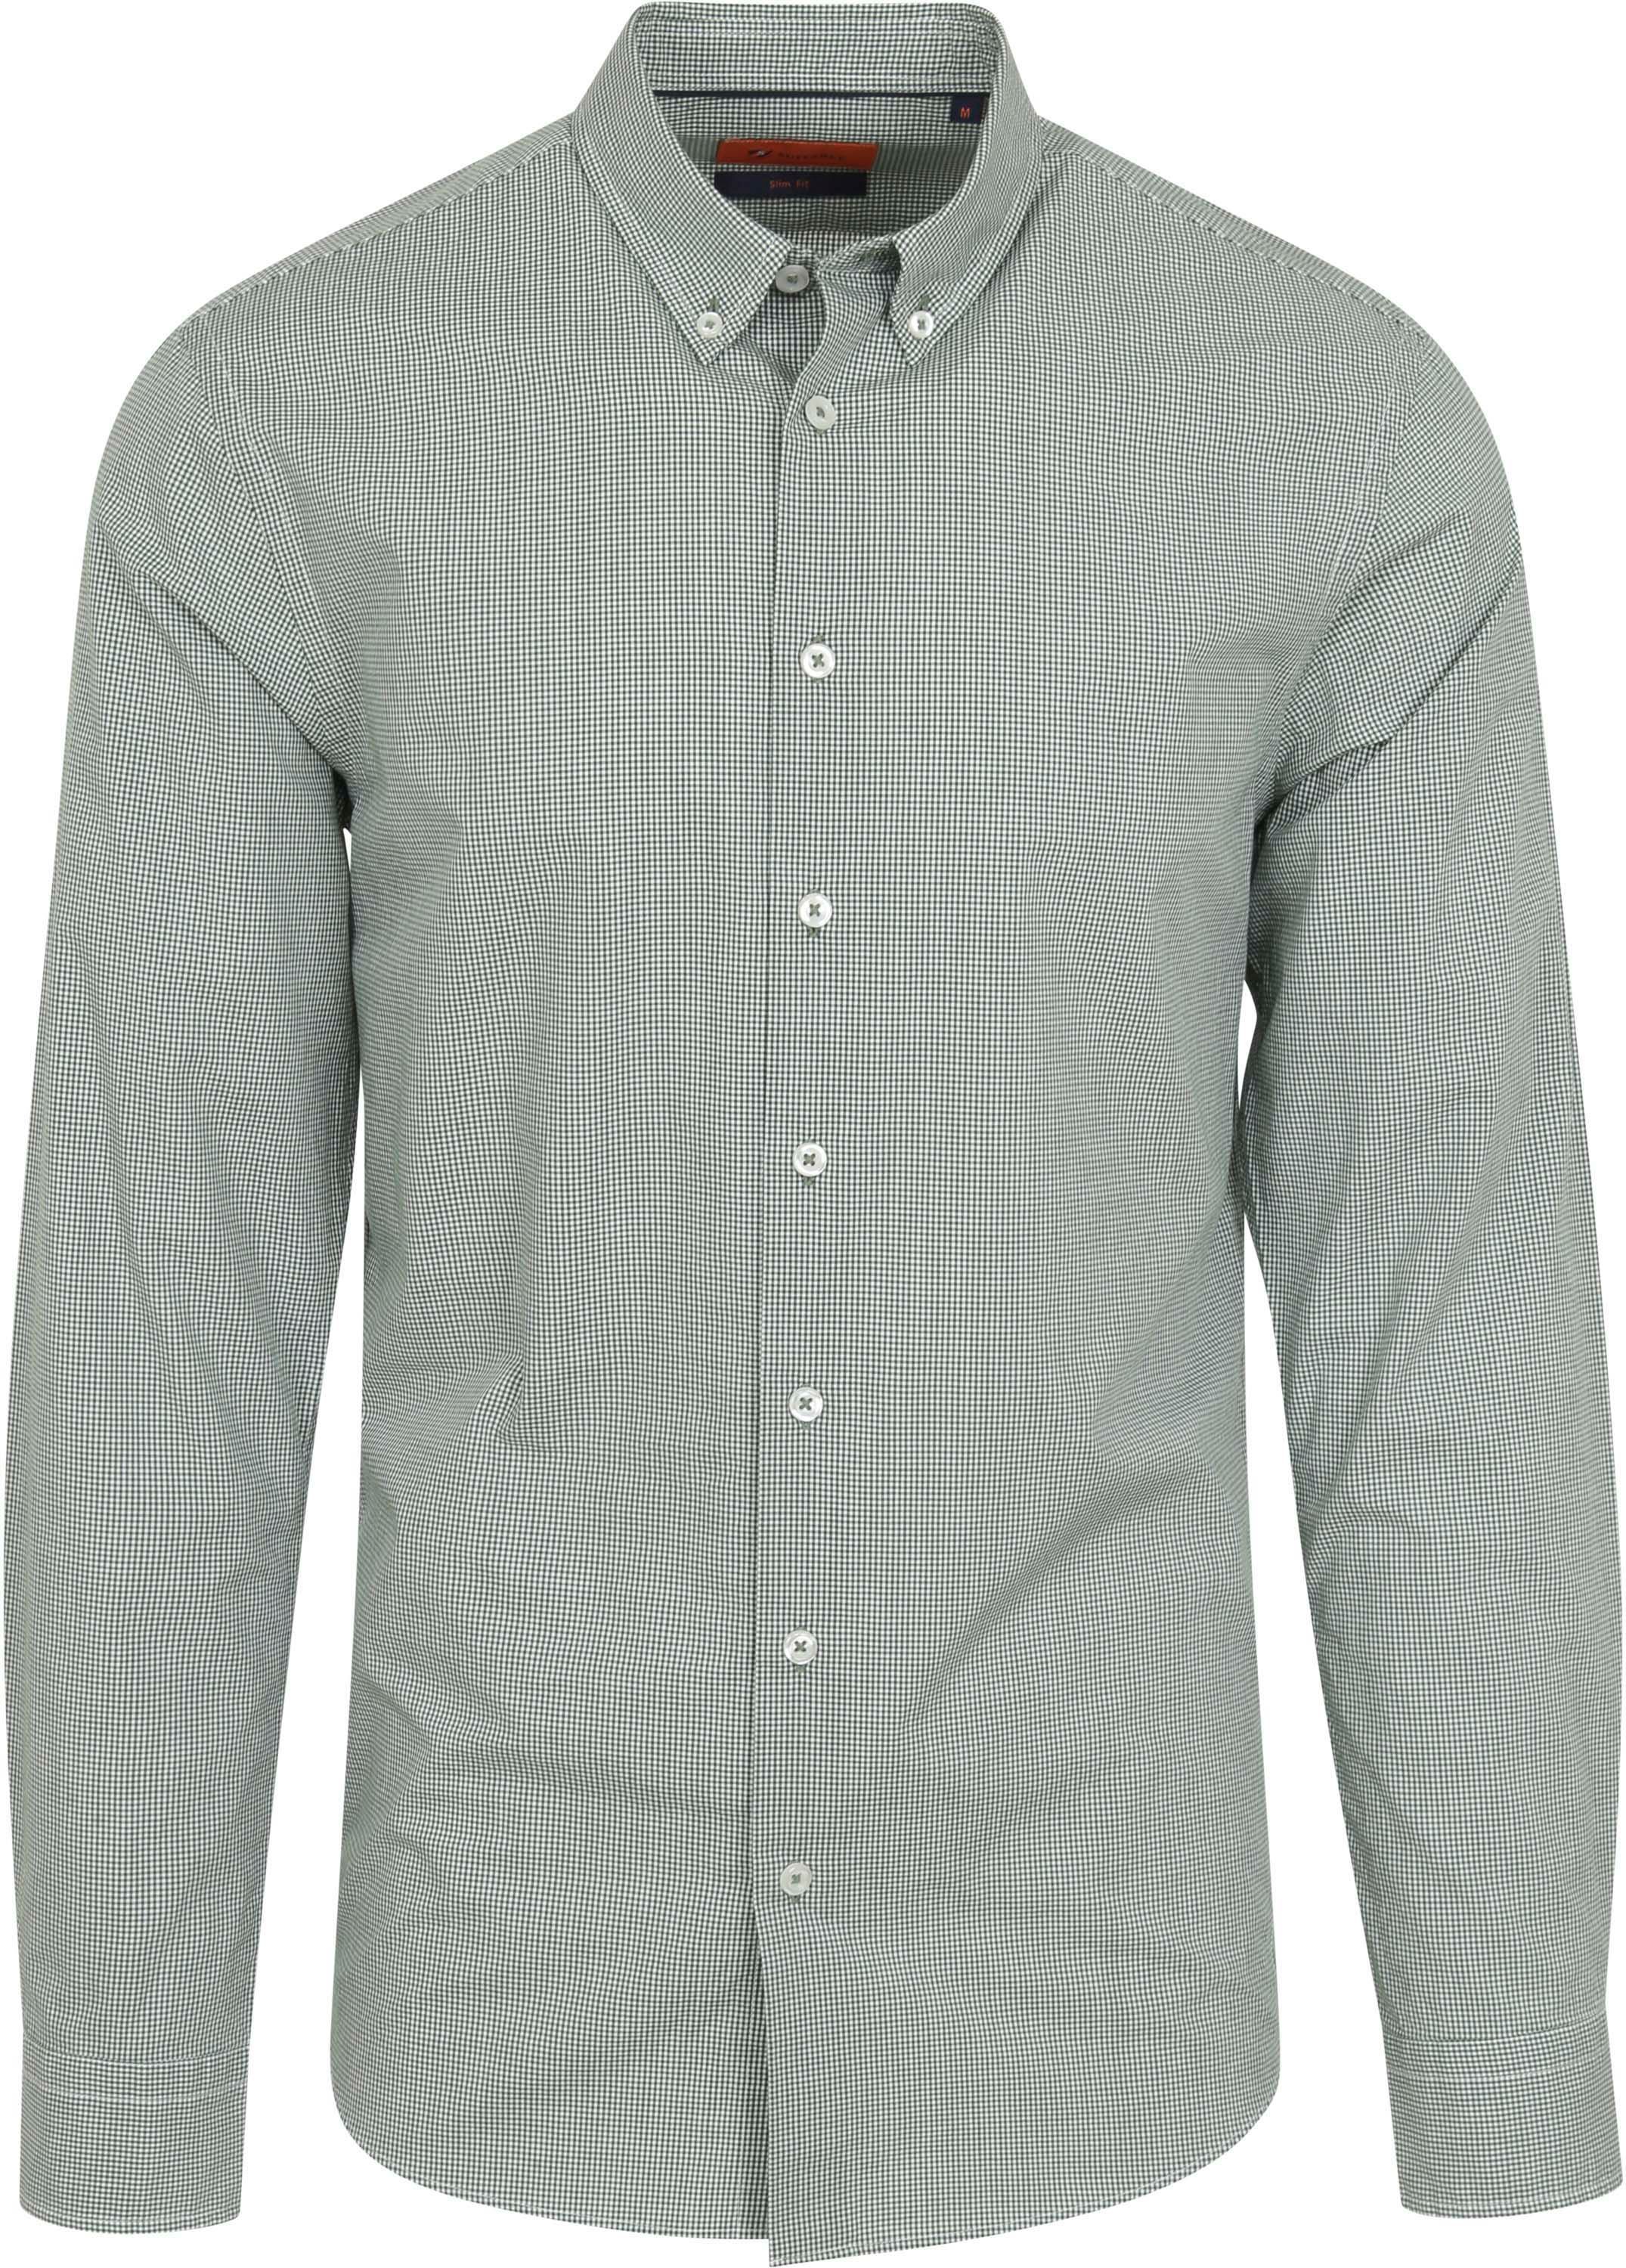 Suitable Shirt Vichy Checks Green size L